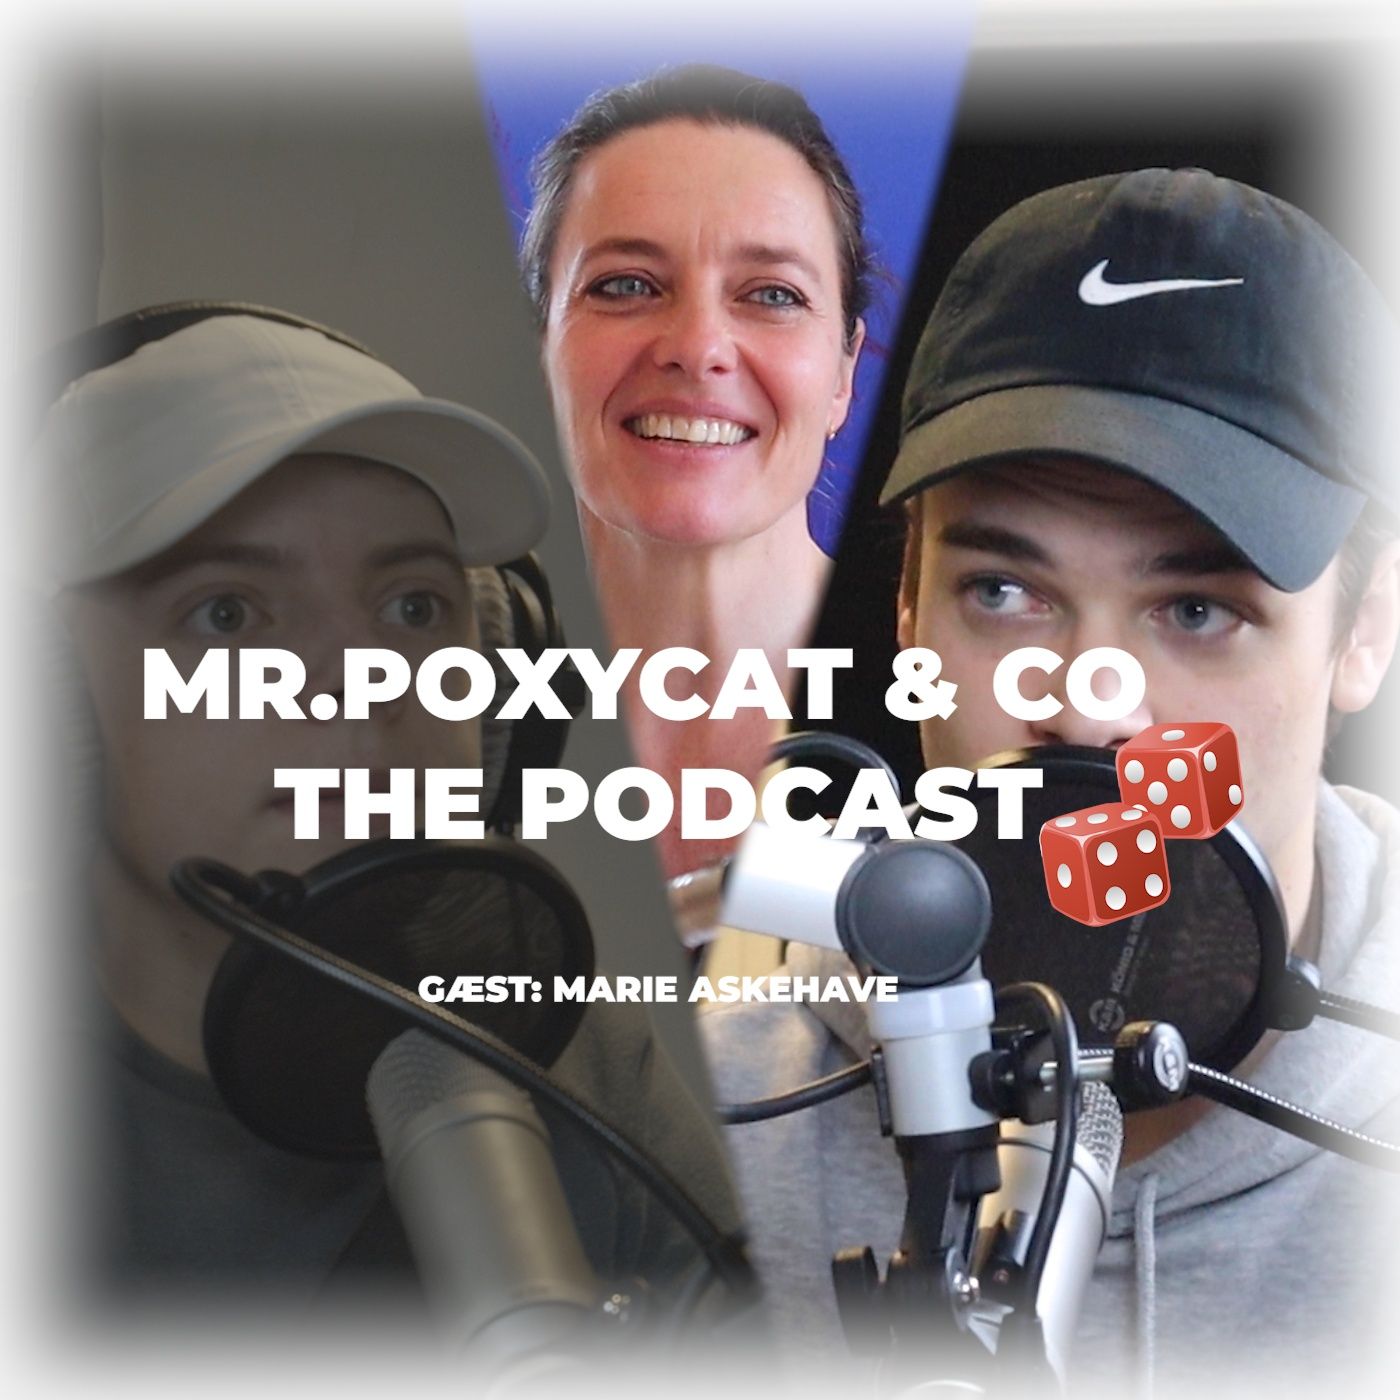 Mr. Poxycat & Co. The Podcast #5